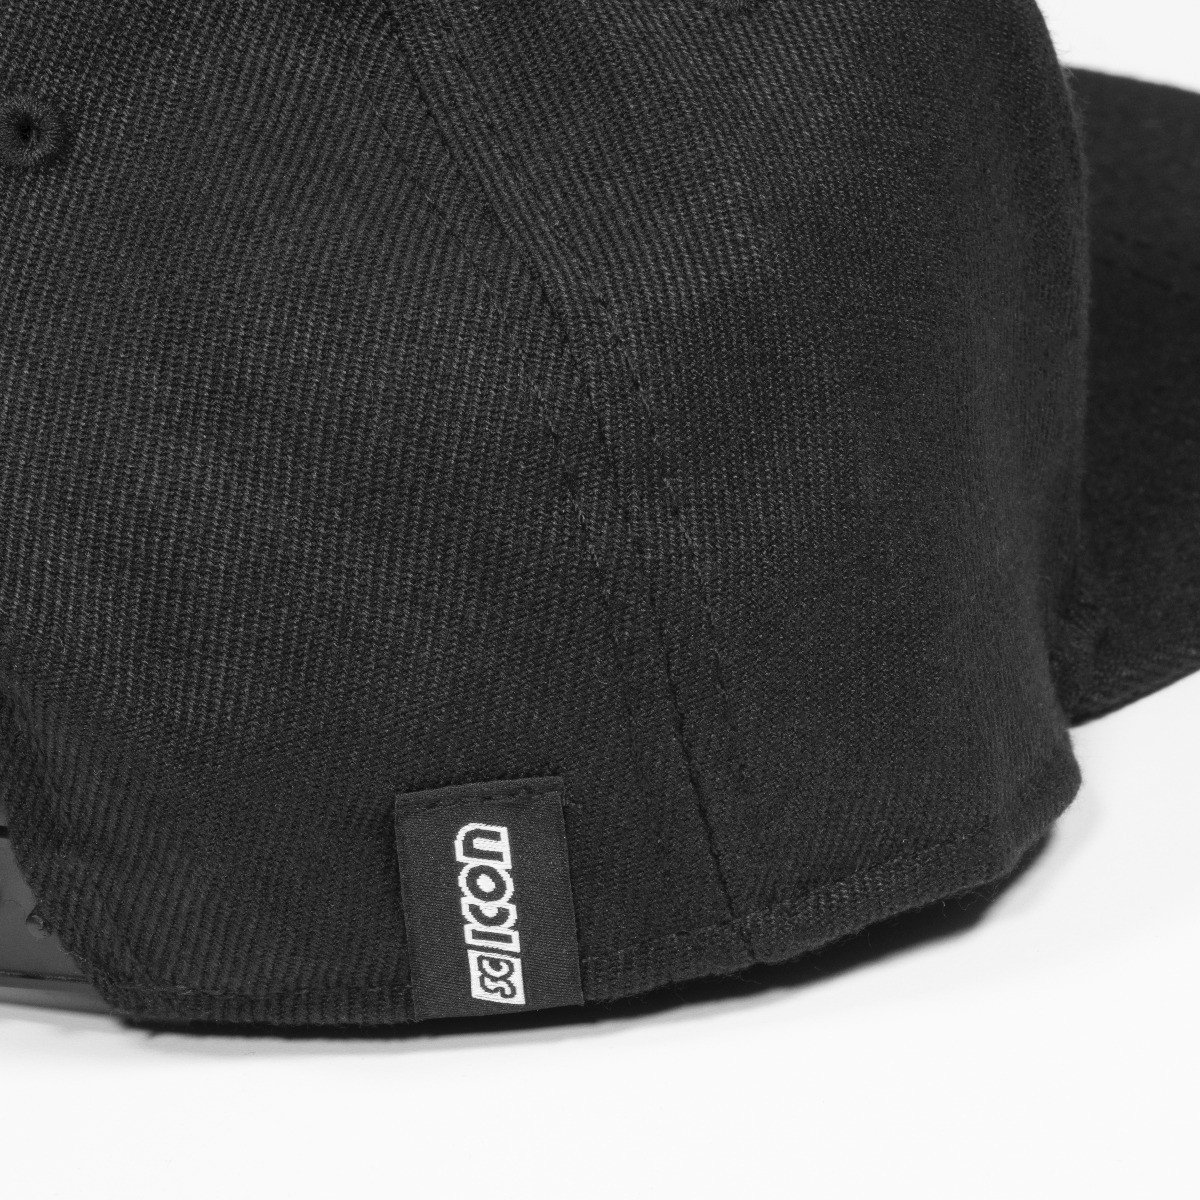 SCICON BLACK ON BLACK LOGO SNAPBACK CAP - 01